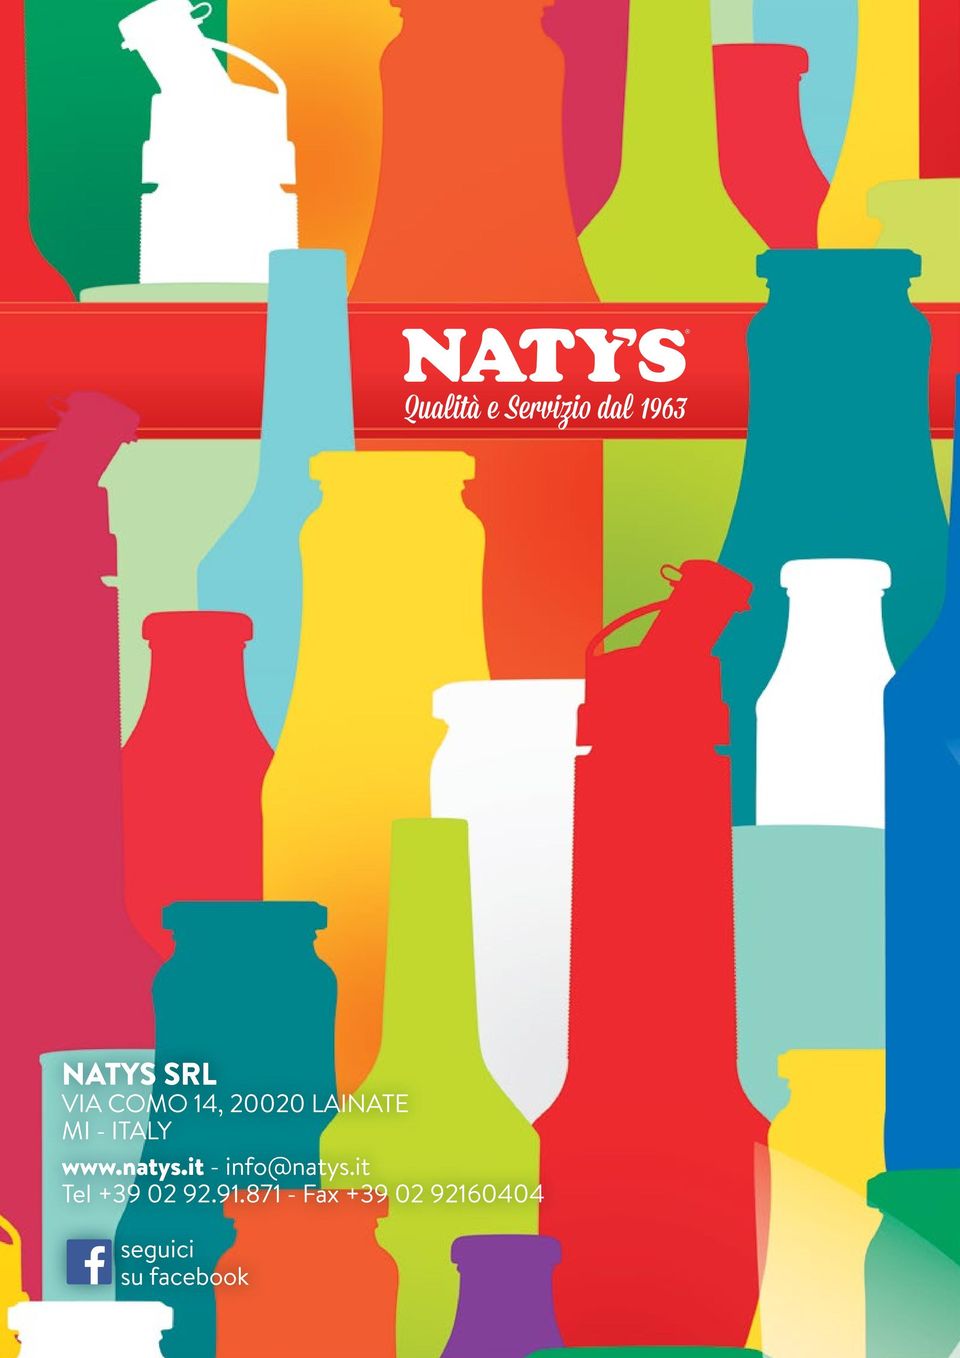 natys.it - info@natys.it Tel +3 02 2.1.